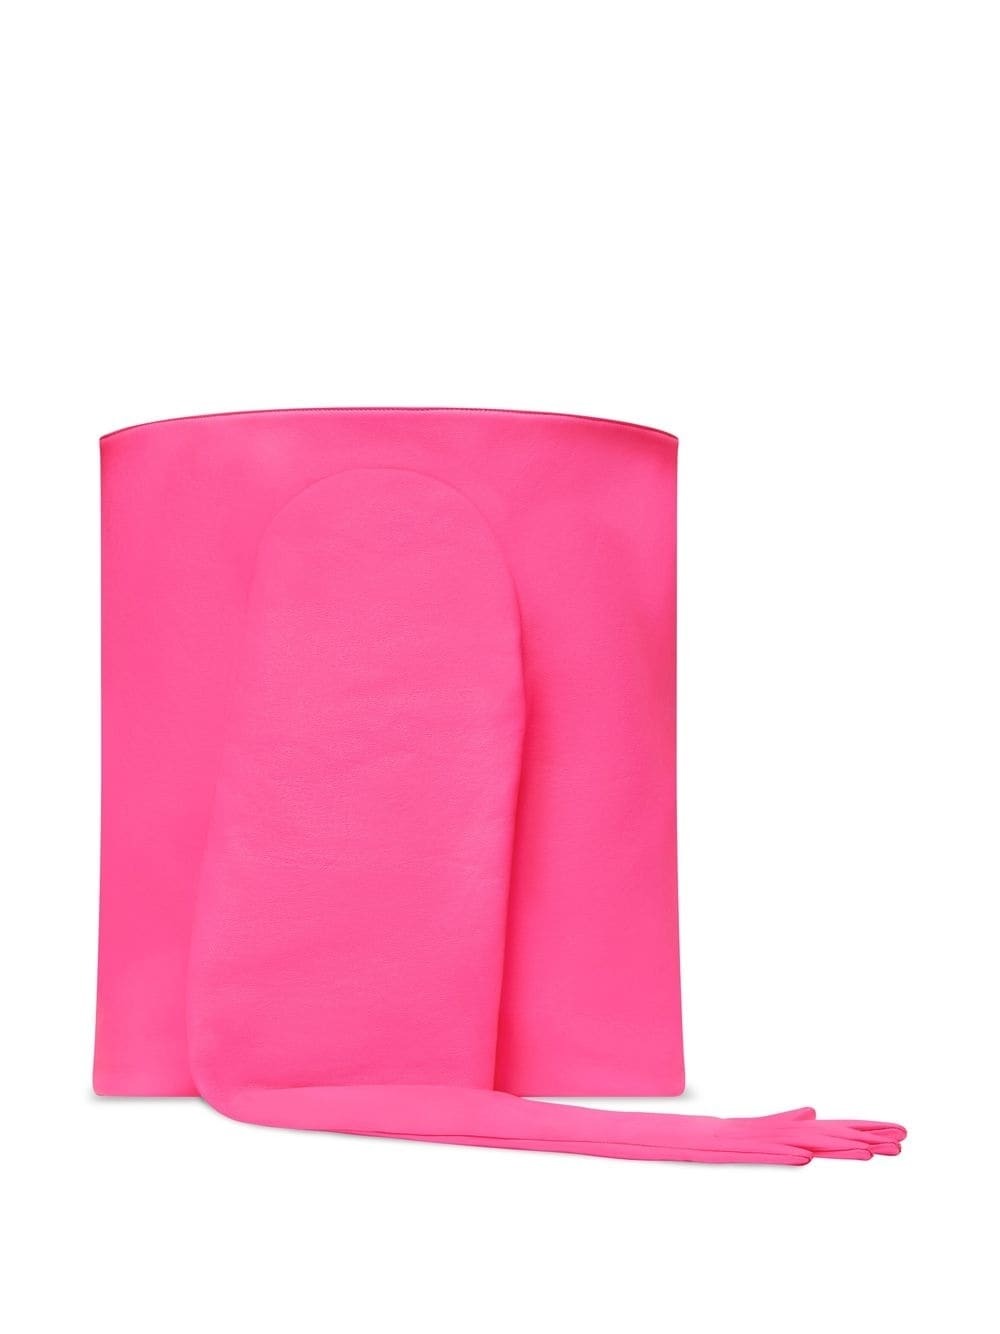 Balenciaga large Glove tote bag - Pink